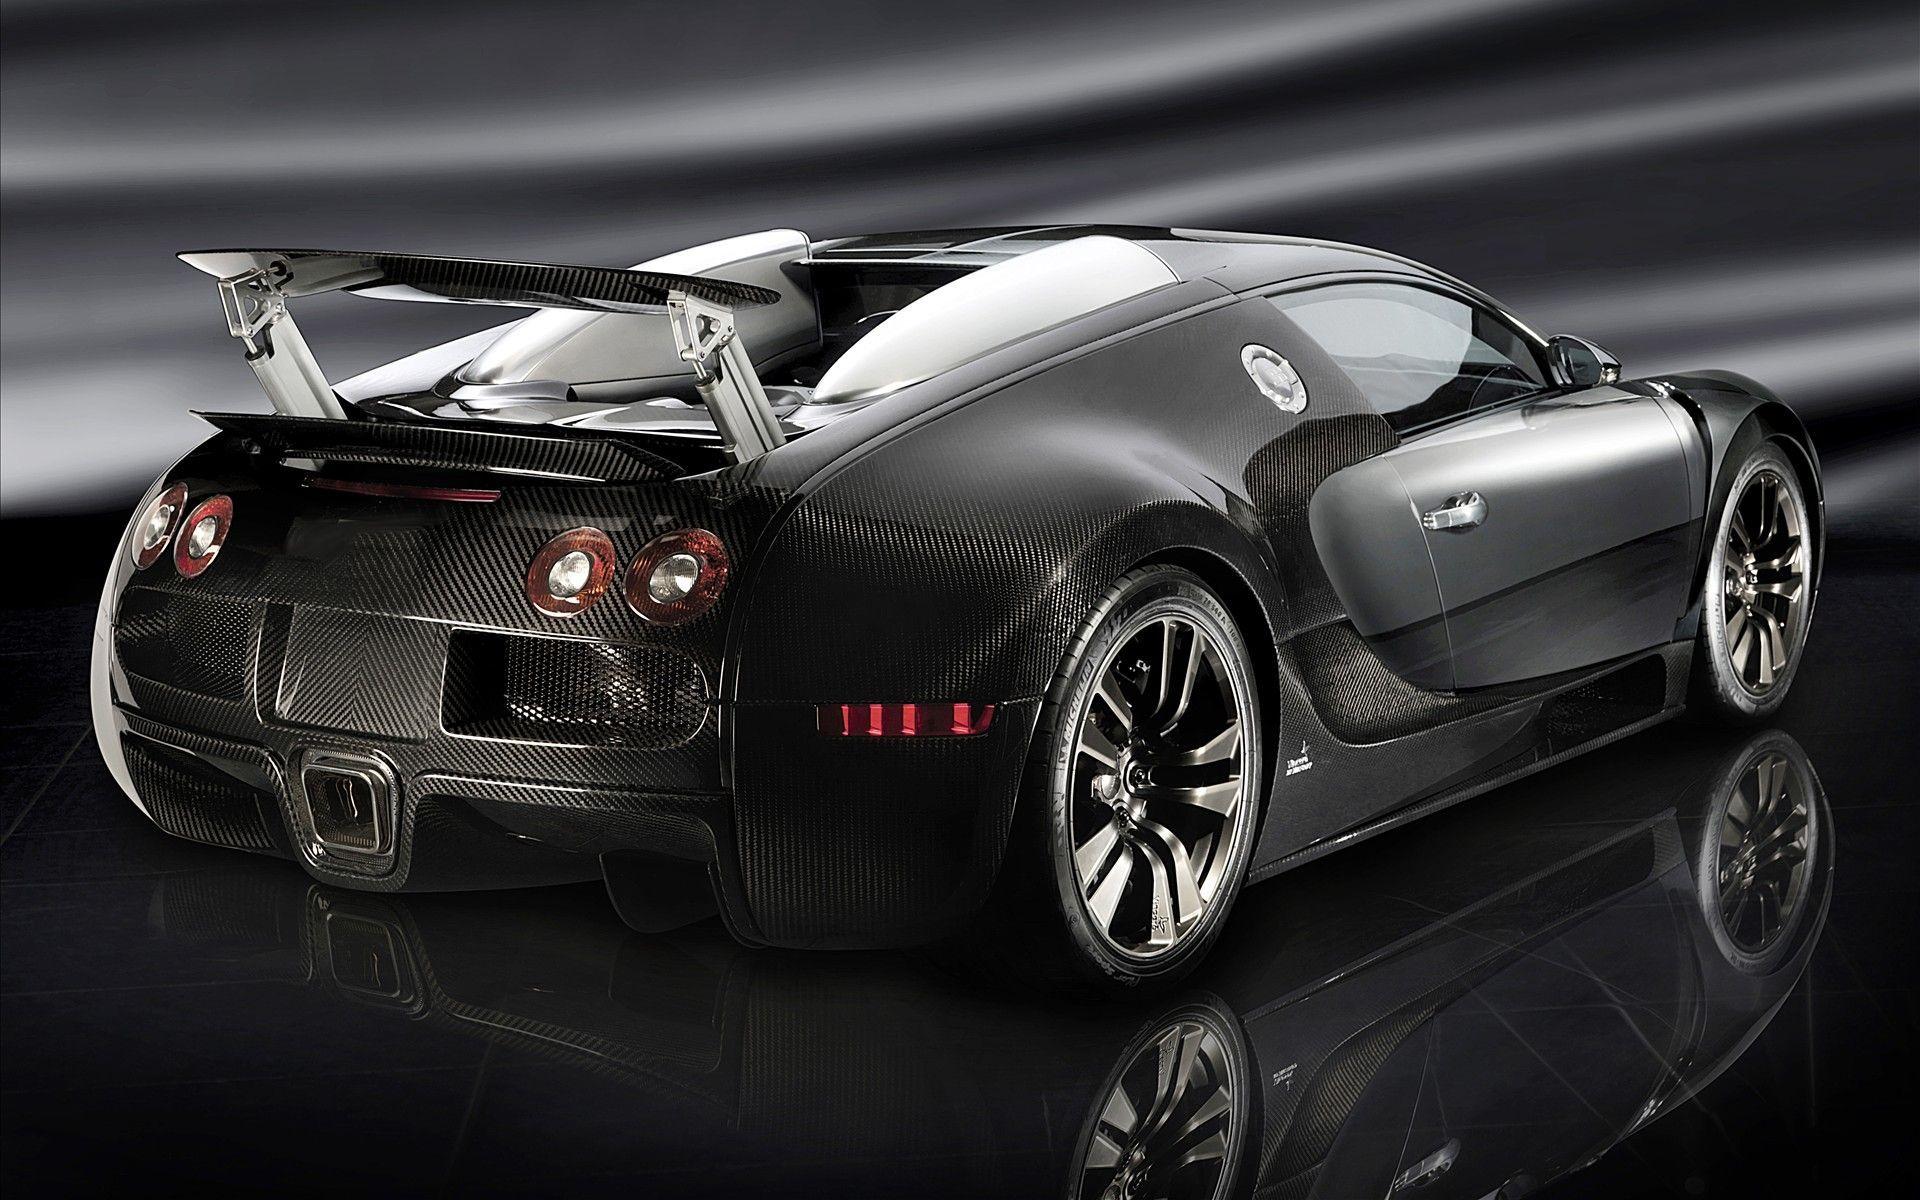 Bugatti Veyron 16.4 Wallpaper HD Photo, Wallpaper and other Image